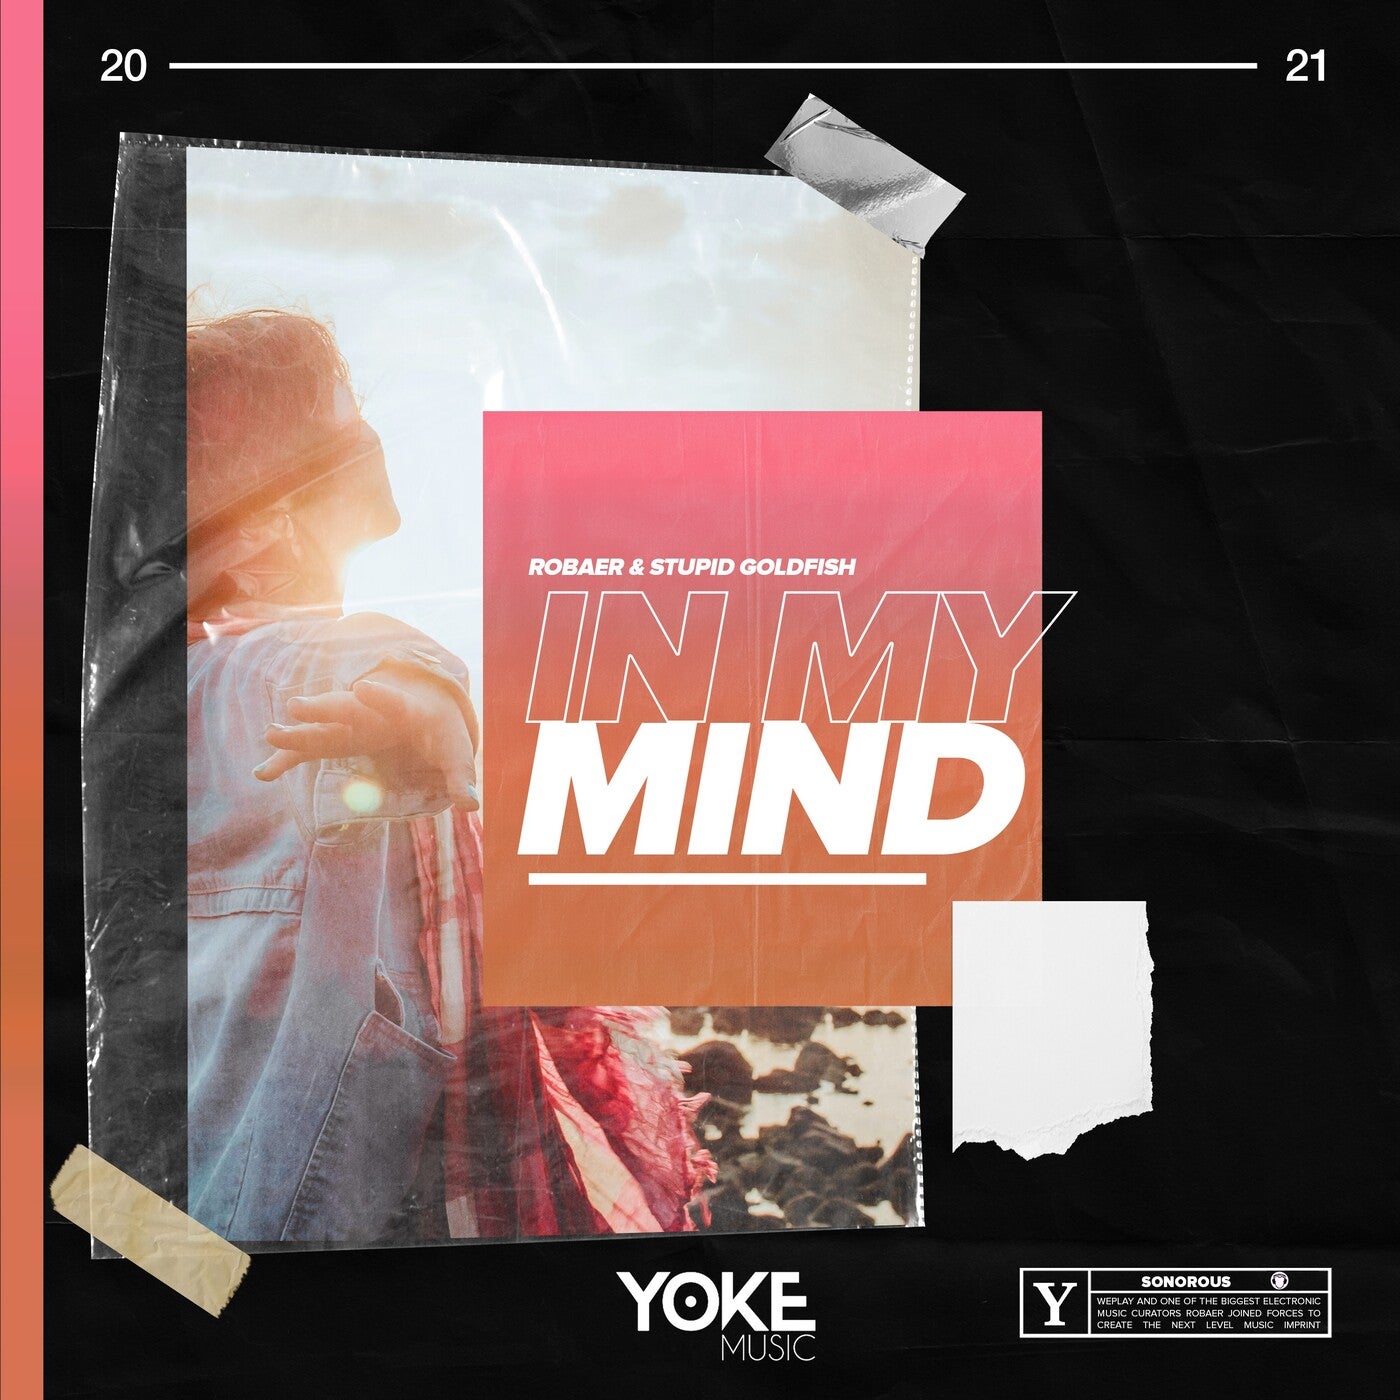 YOKE Music artists & music download - Beatport